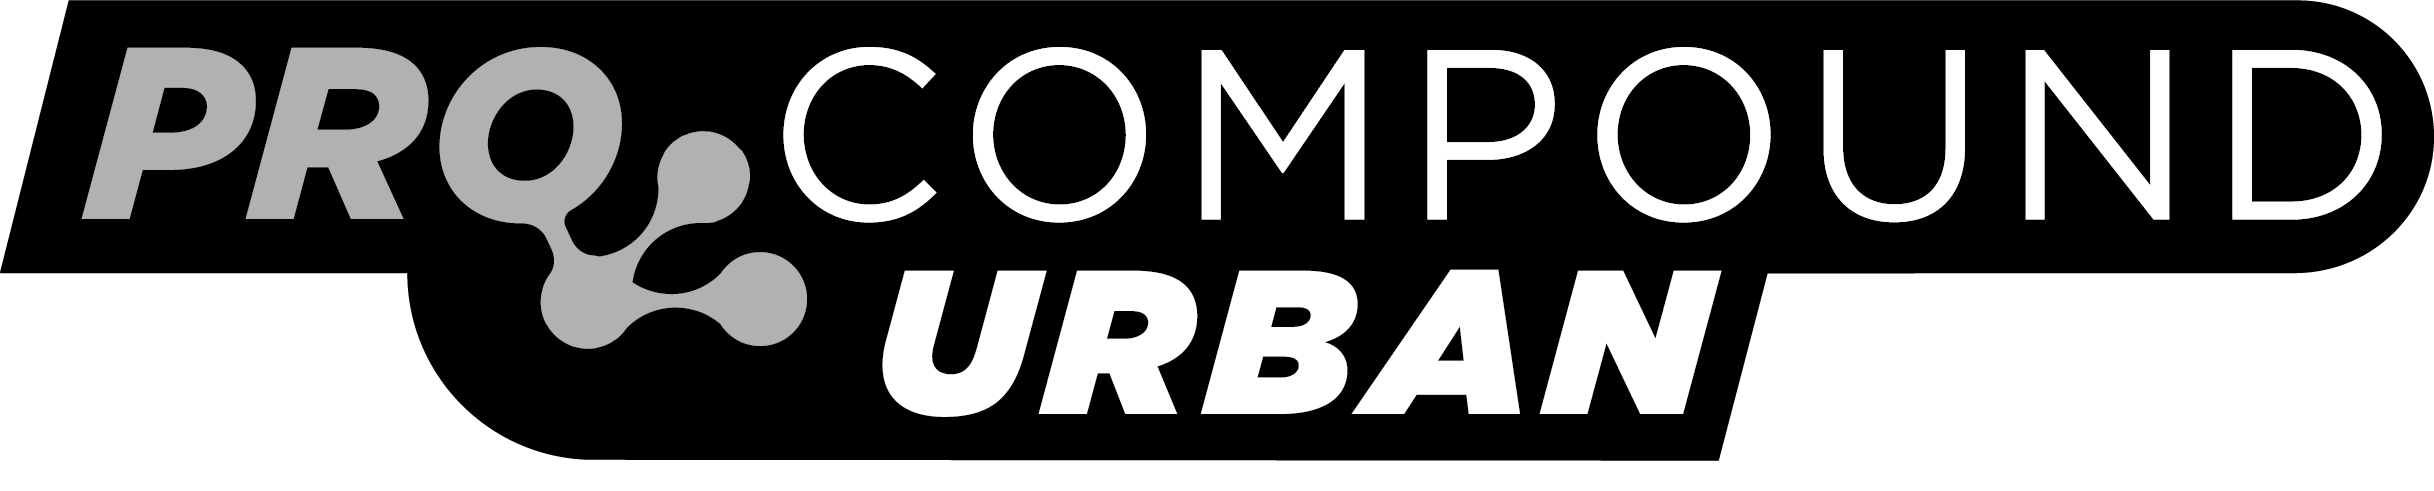 PRO Compound Urban logo